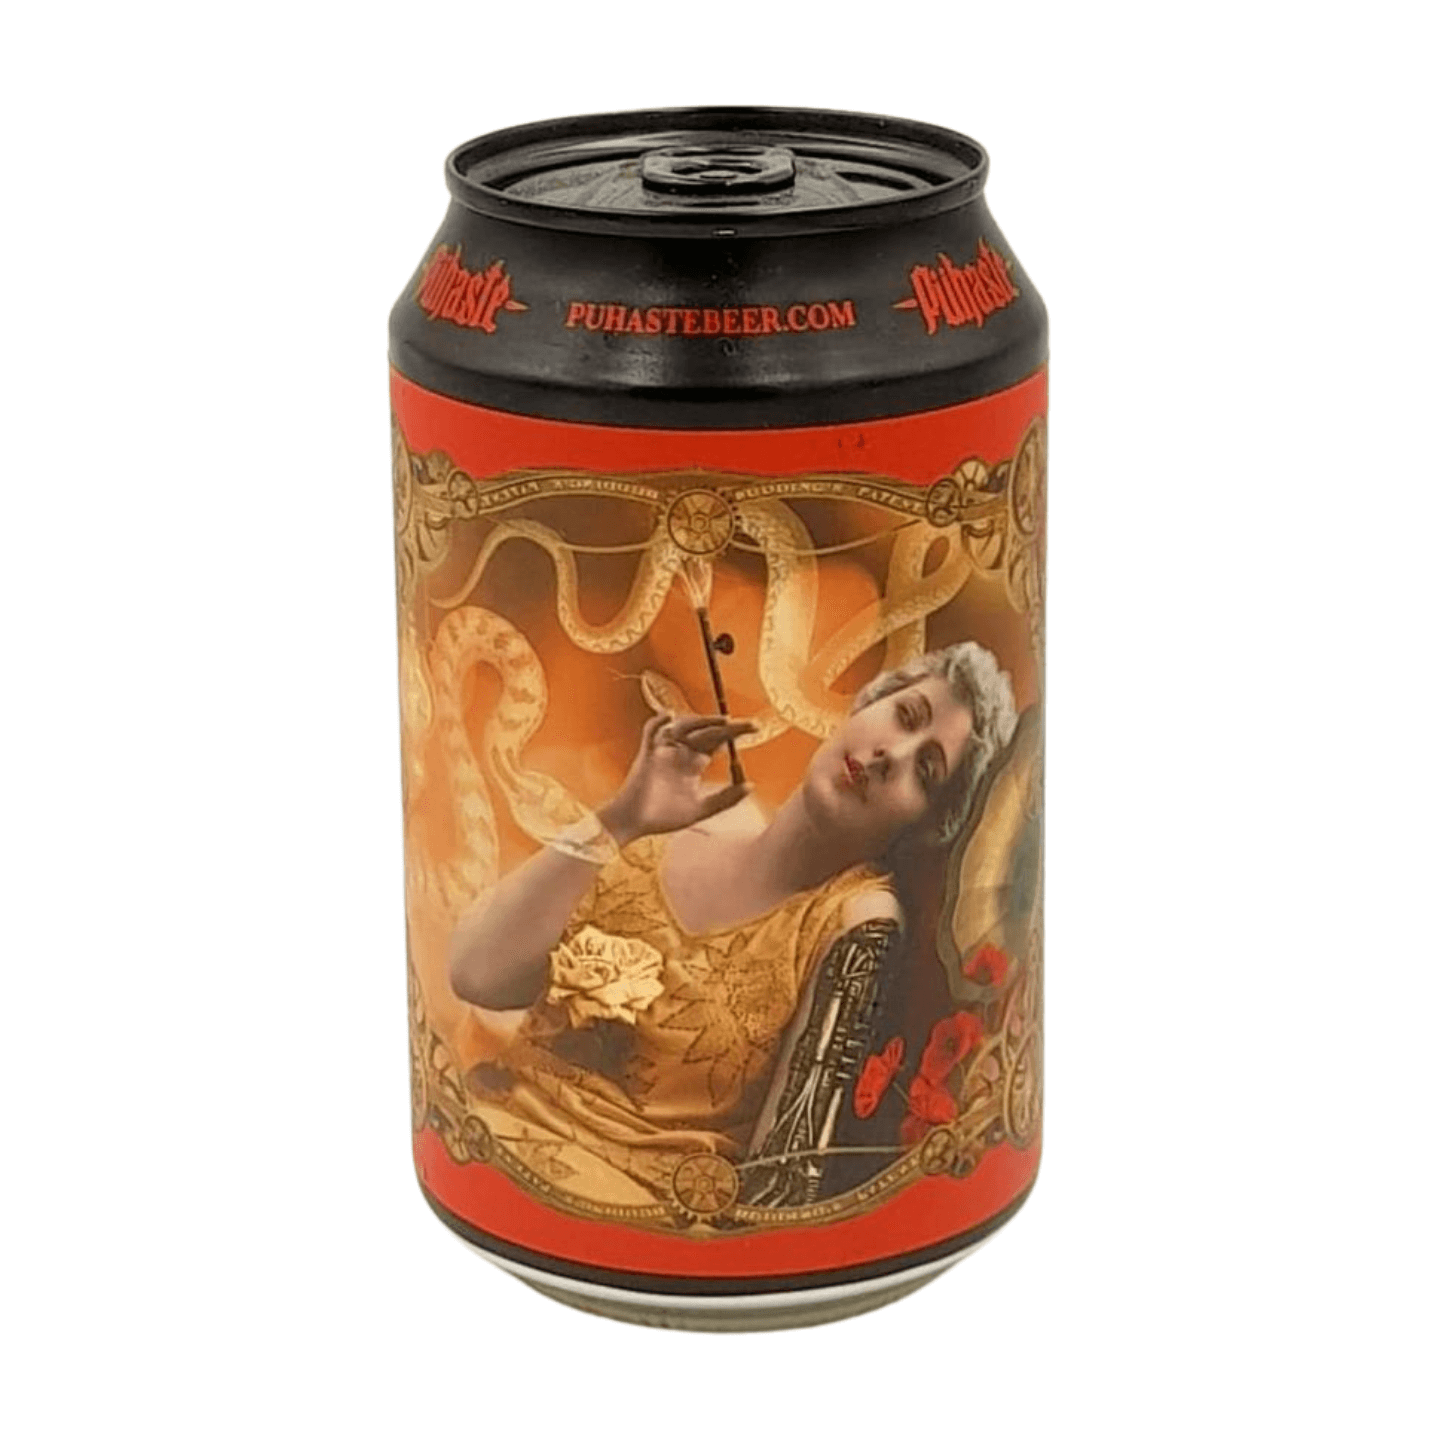 Pühaste Brewery Dekadents | Imperial Stout Webshop Online Verdins Bierwinkel Rotterdam